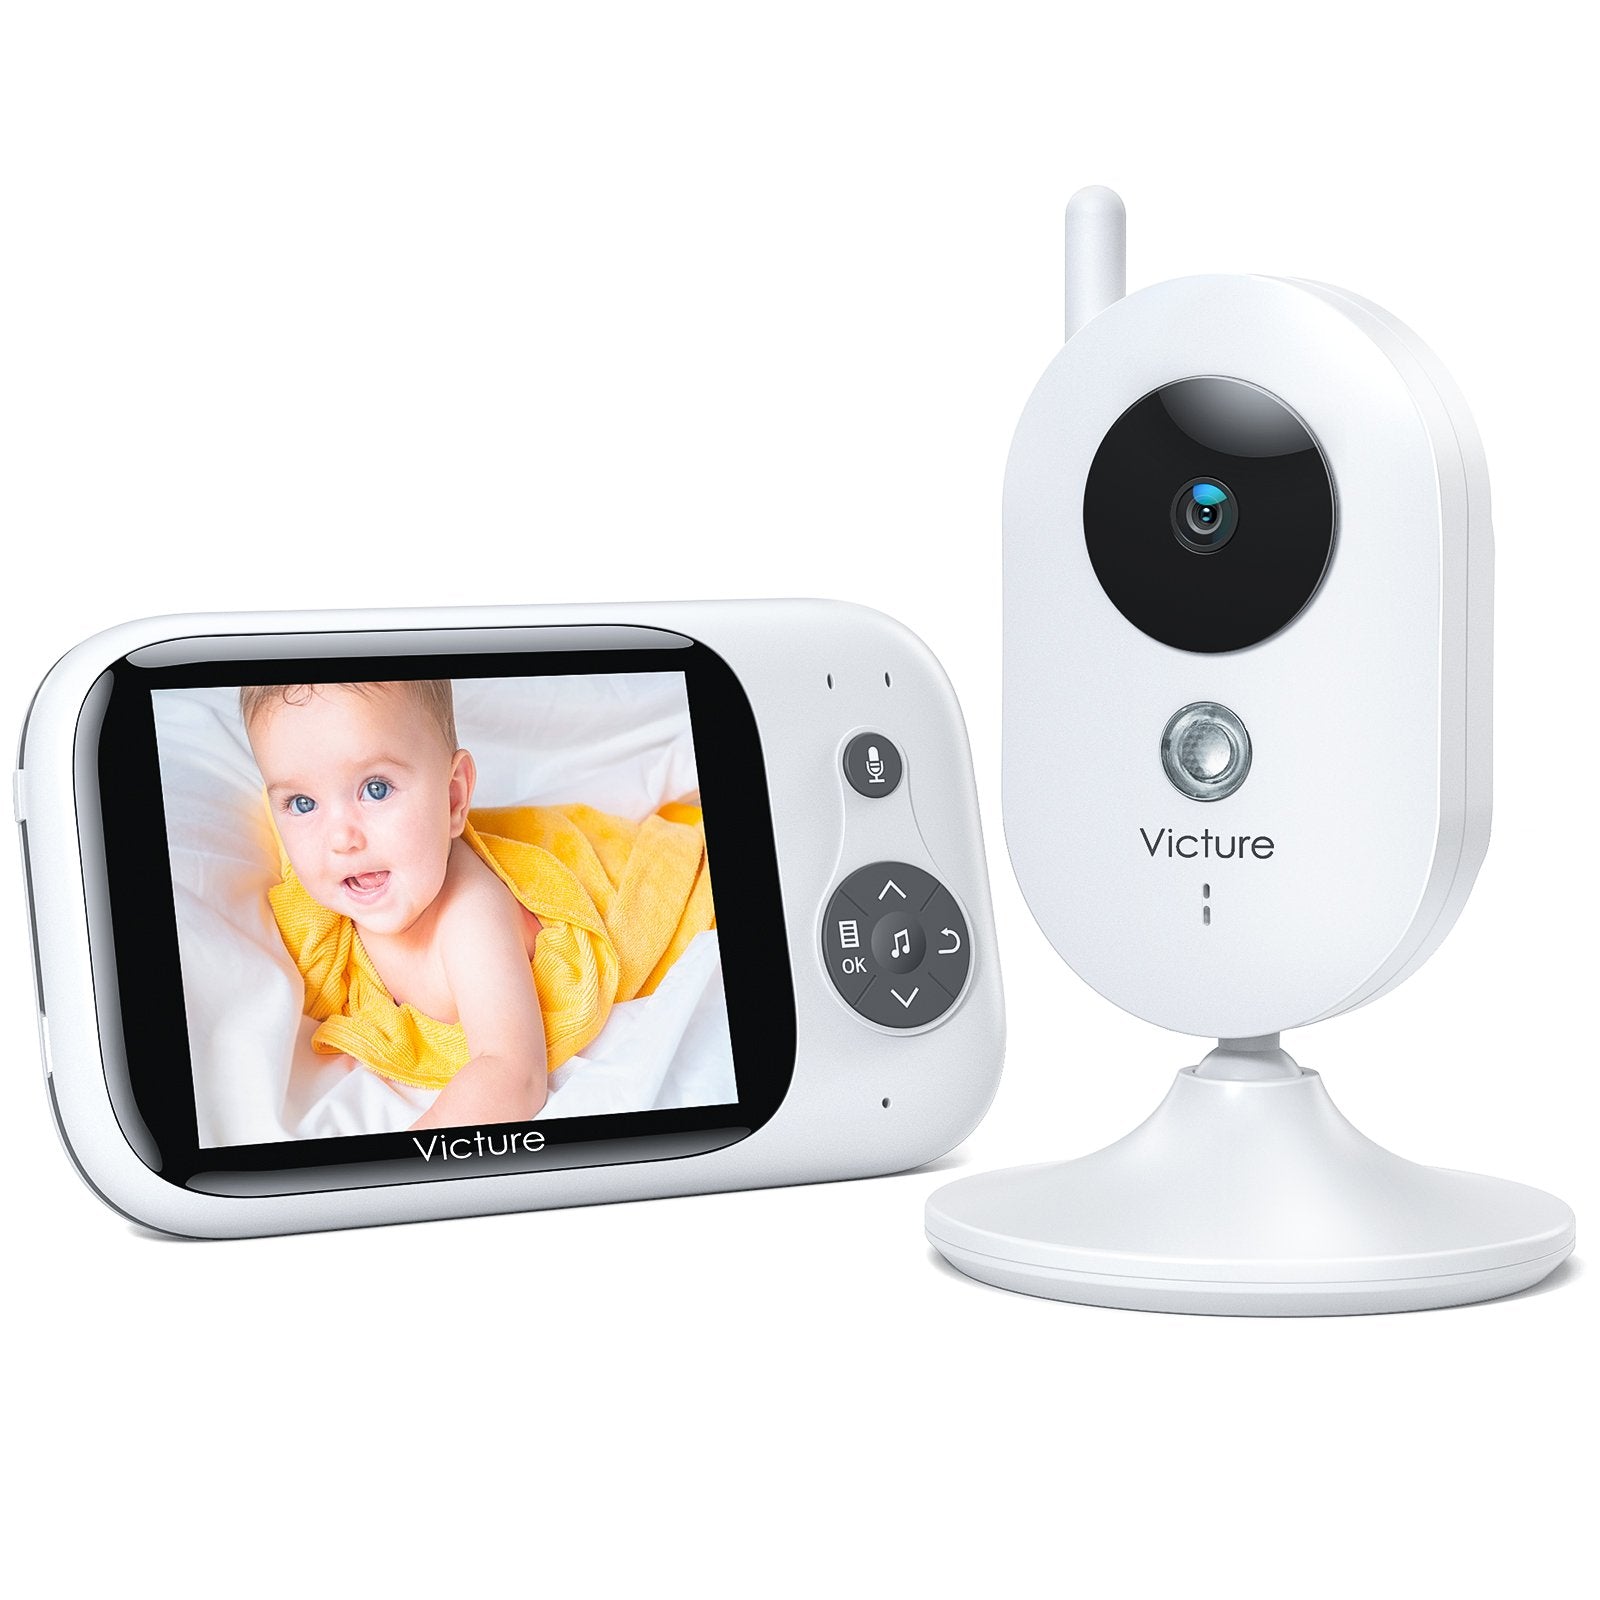 Installation caméra surveillance bébé – SNS Groupe